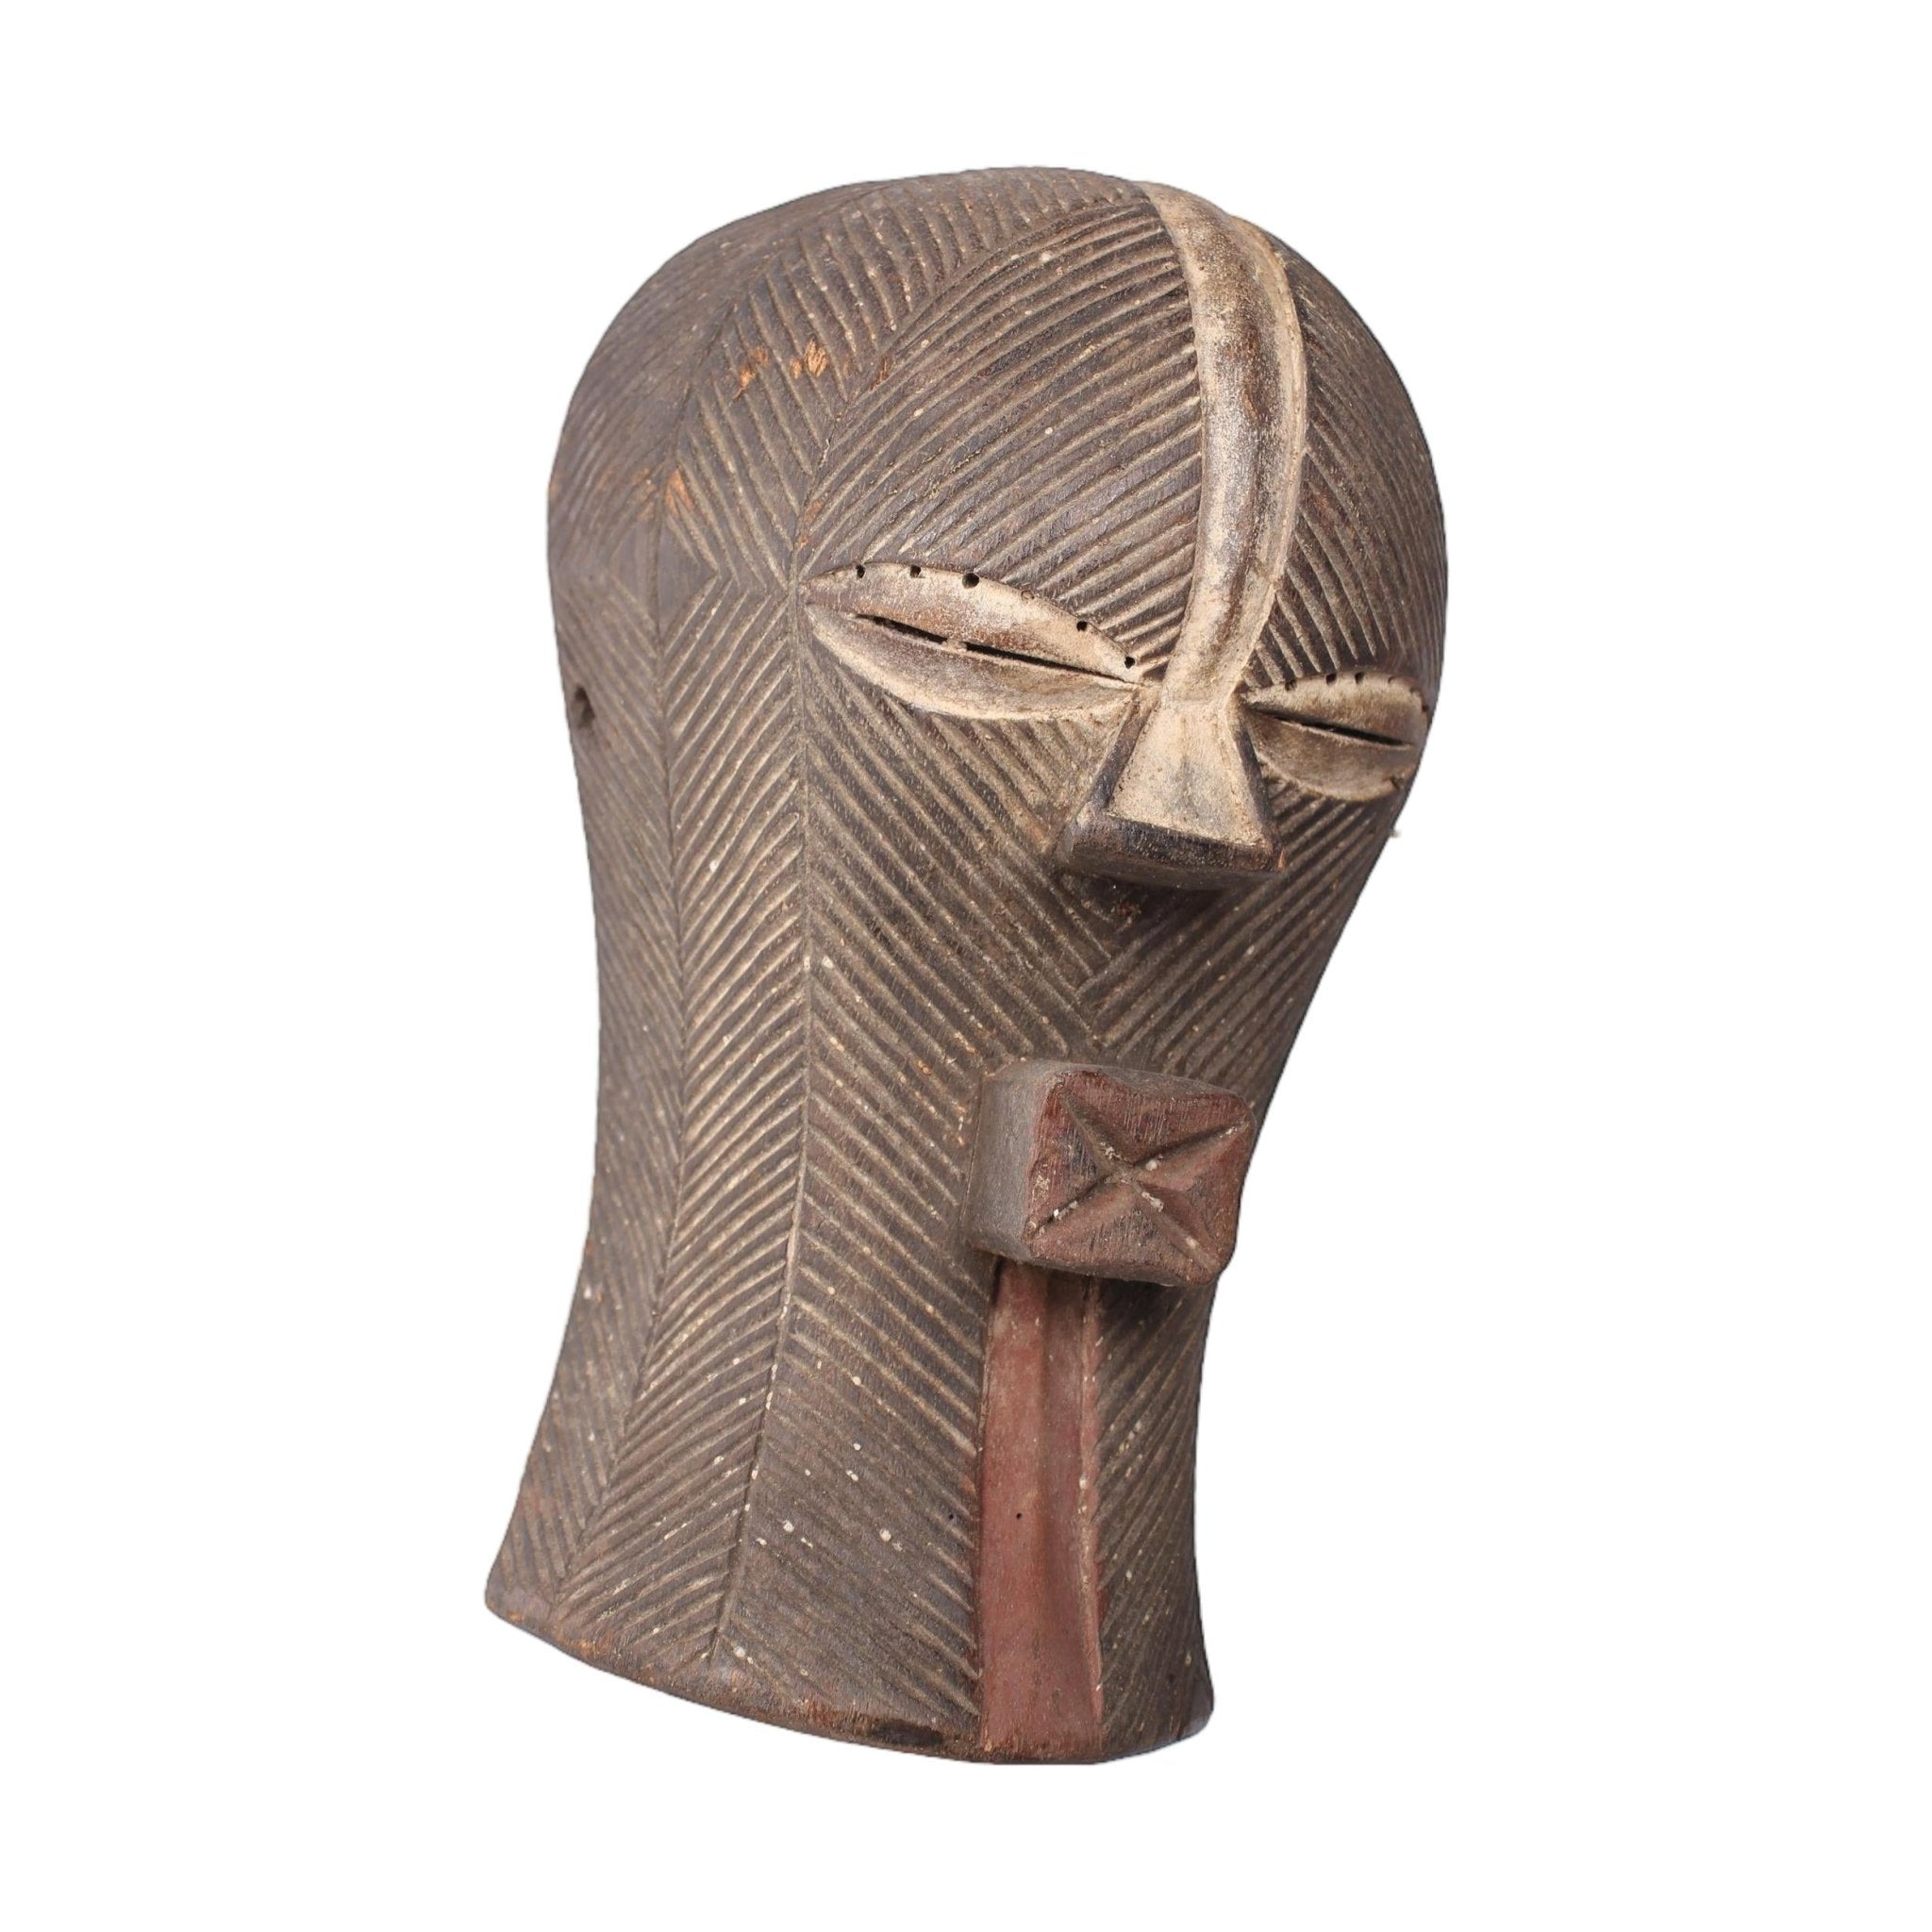 Basonge/Songye Tribe Mask ~13.0" Tall - African Angel Art - Mask